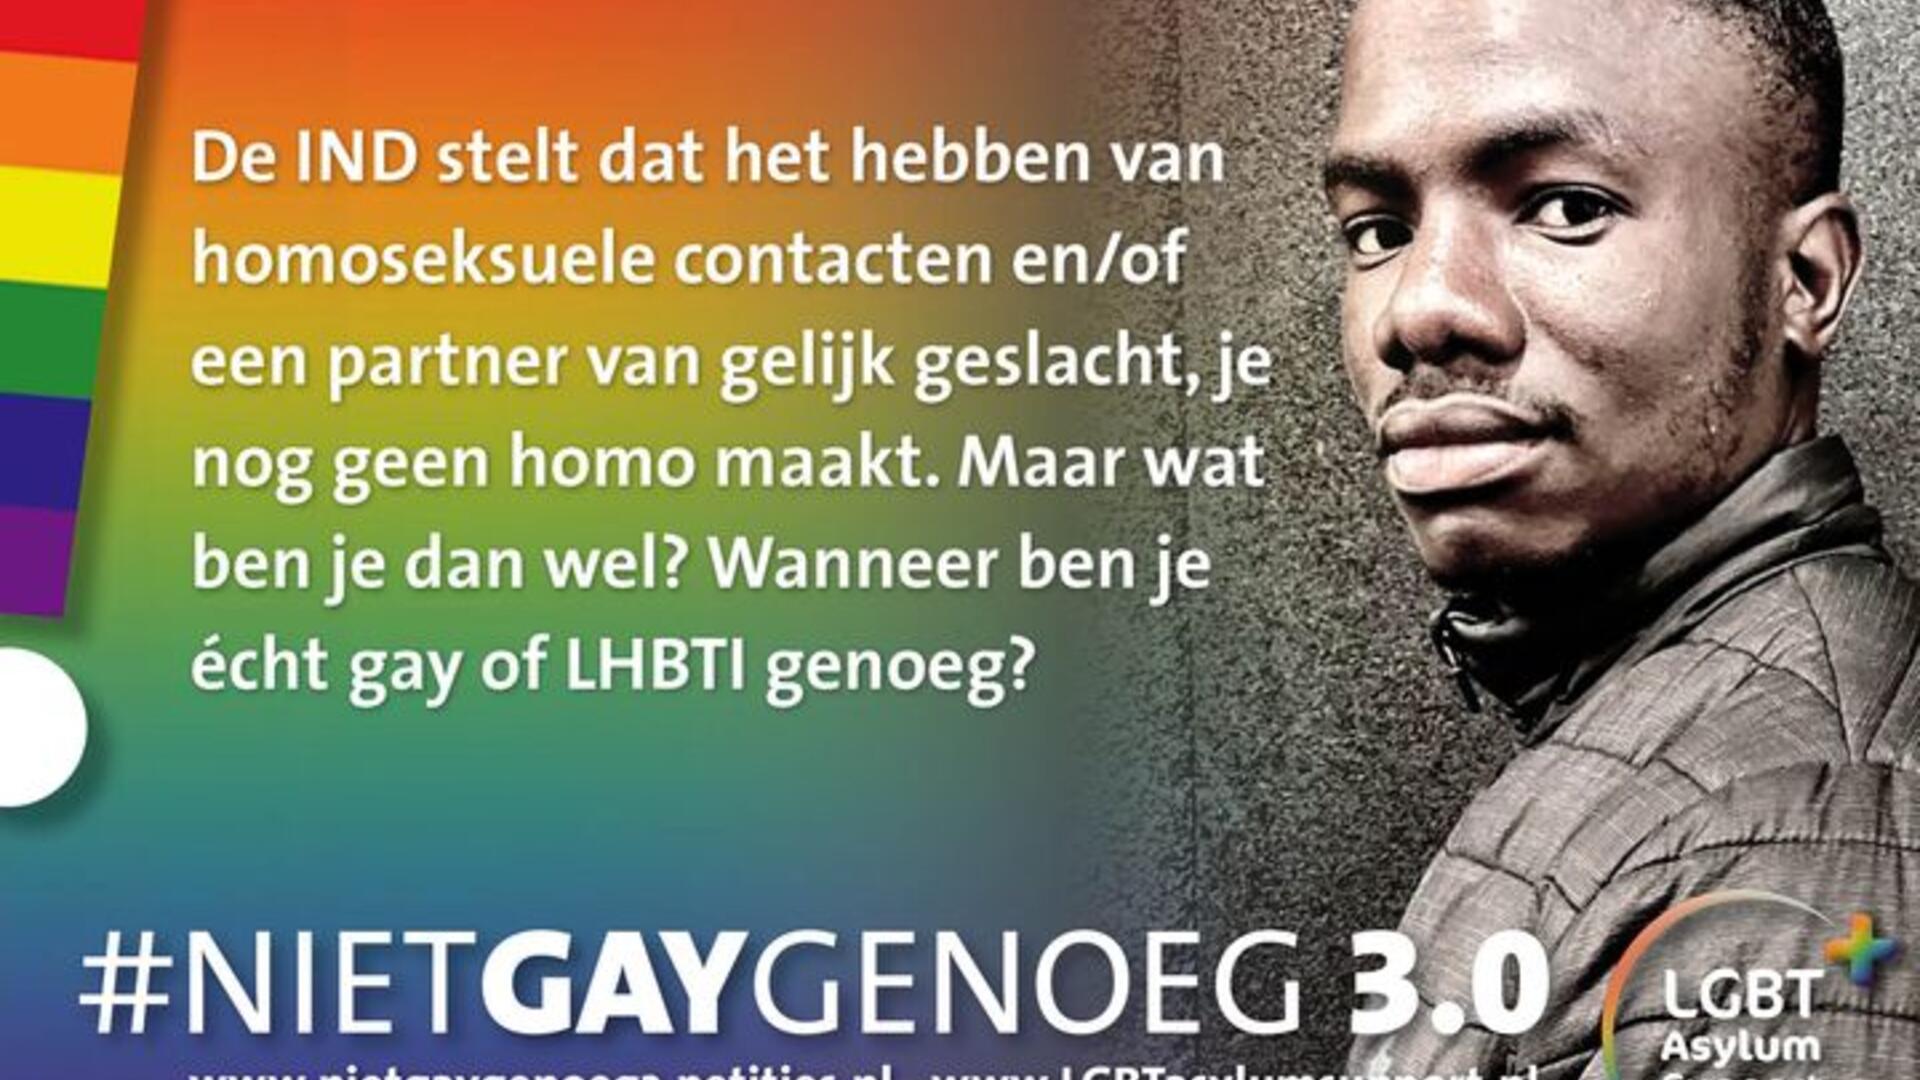 Affiche van LGBT Asylum Support